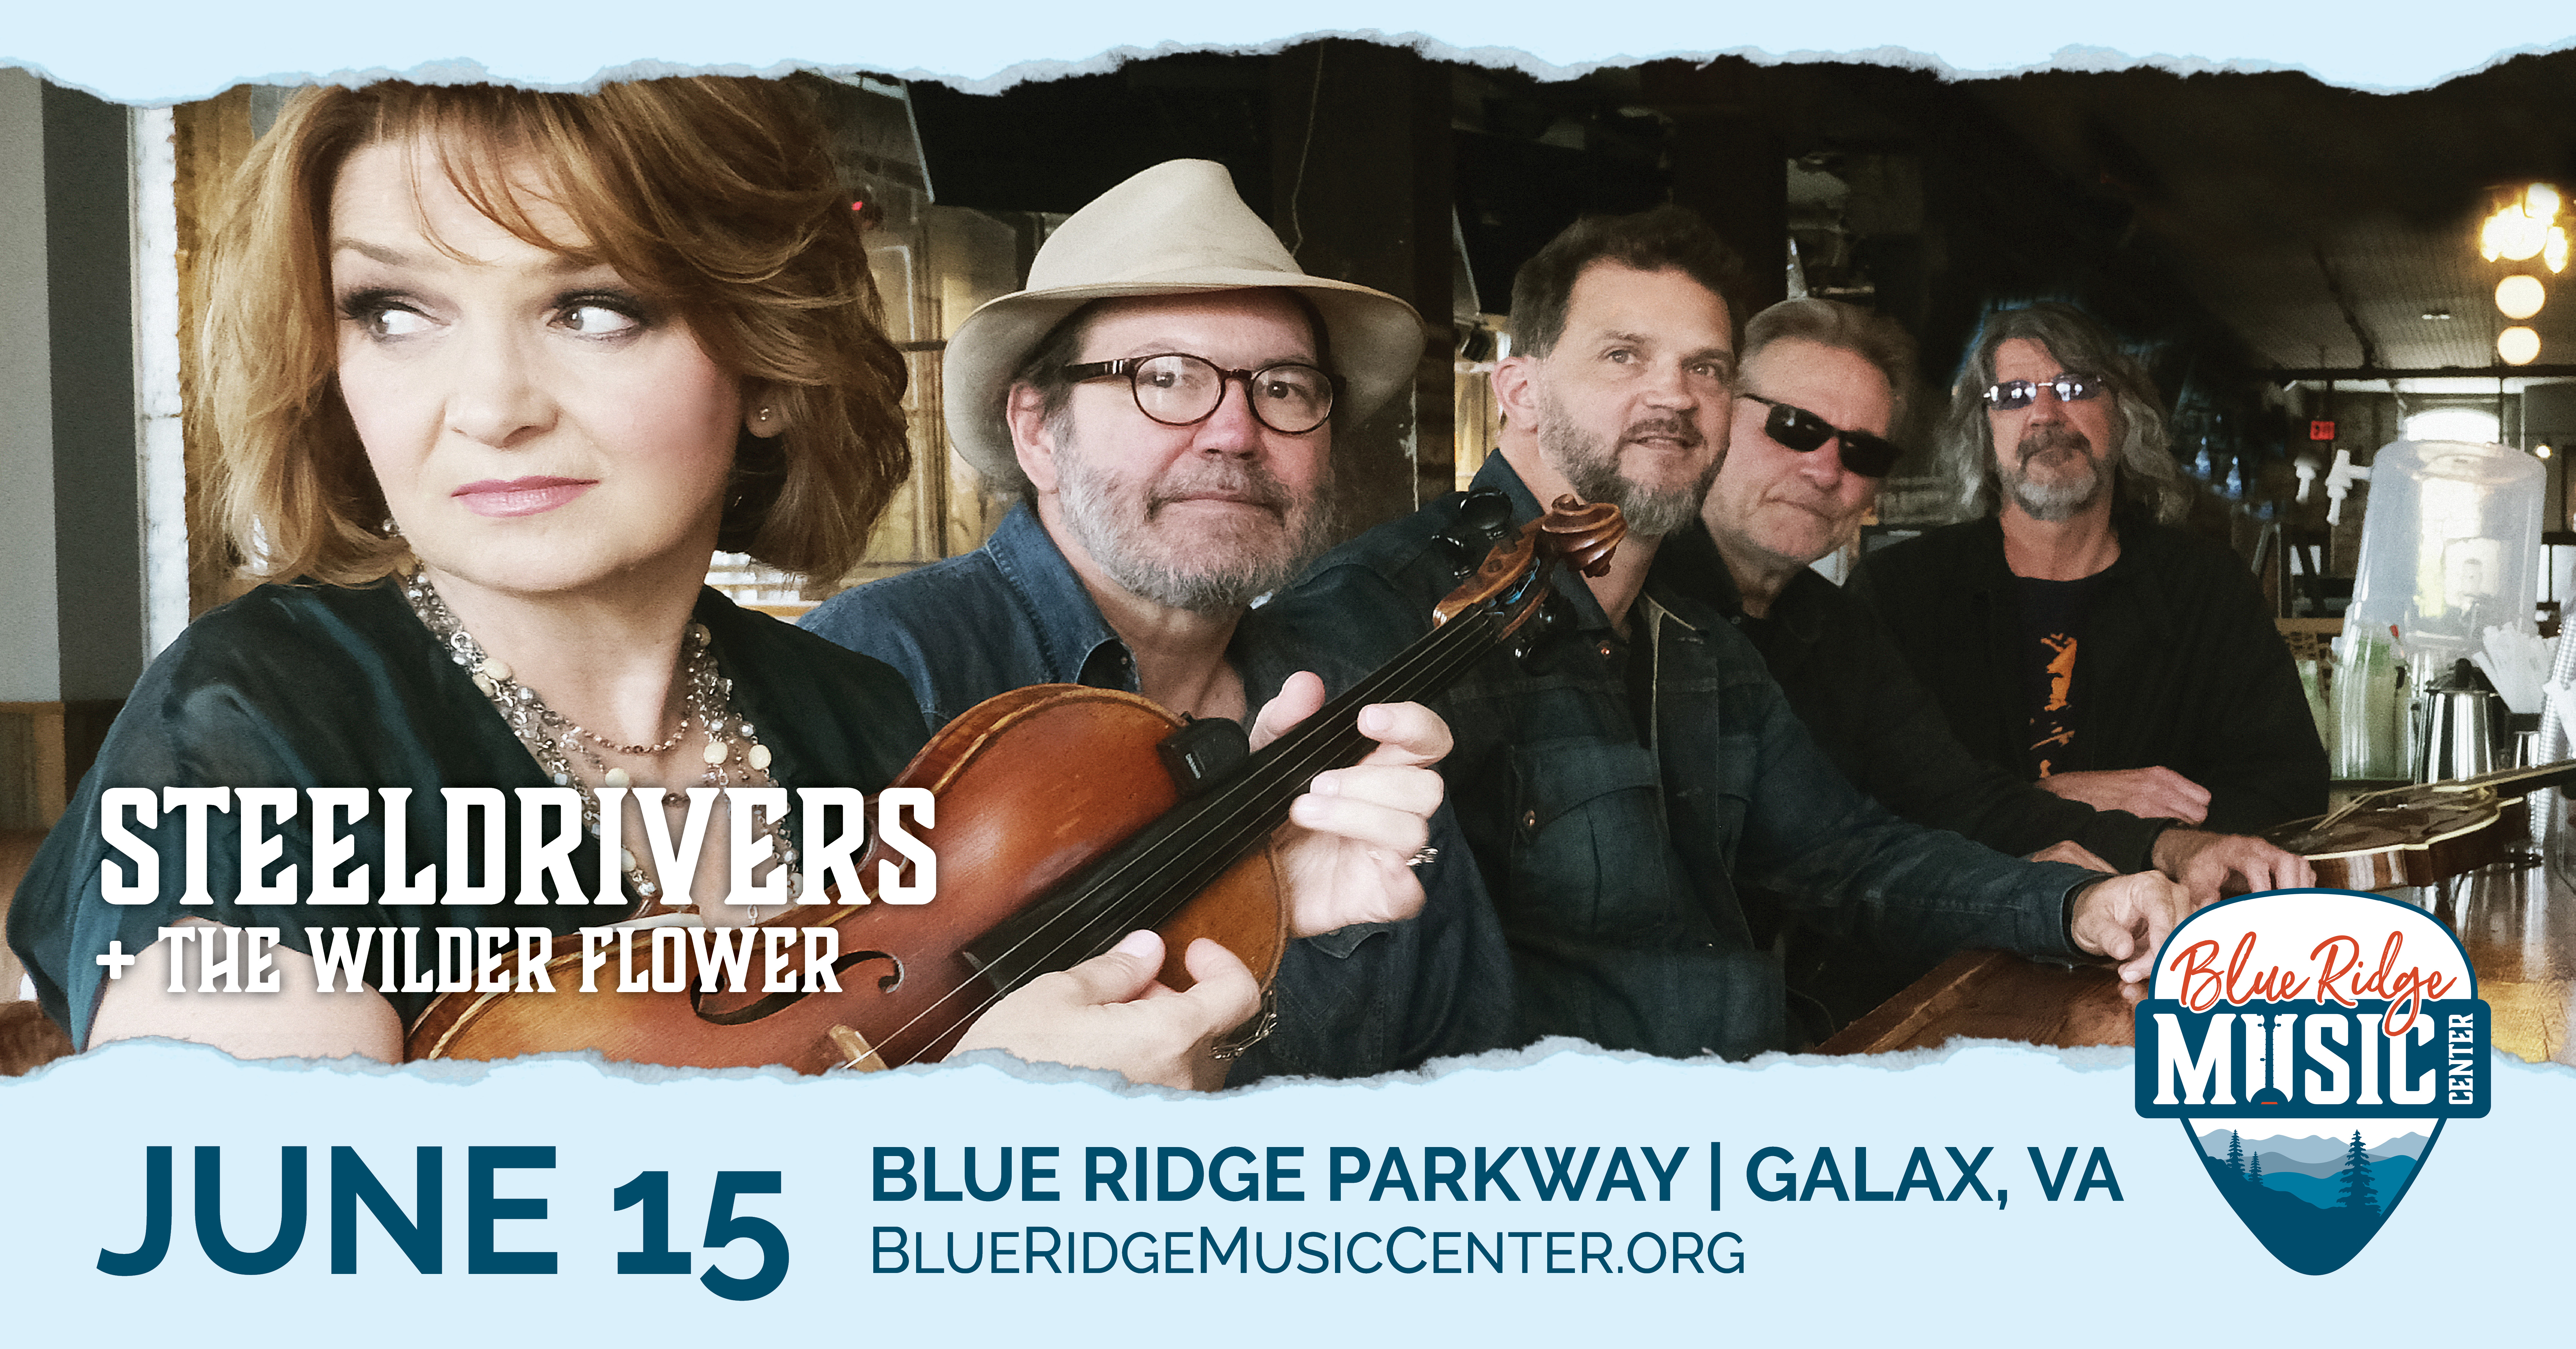 The SteelDrivers + The Wilder Flower at the Blue Ridge Music Center